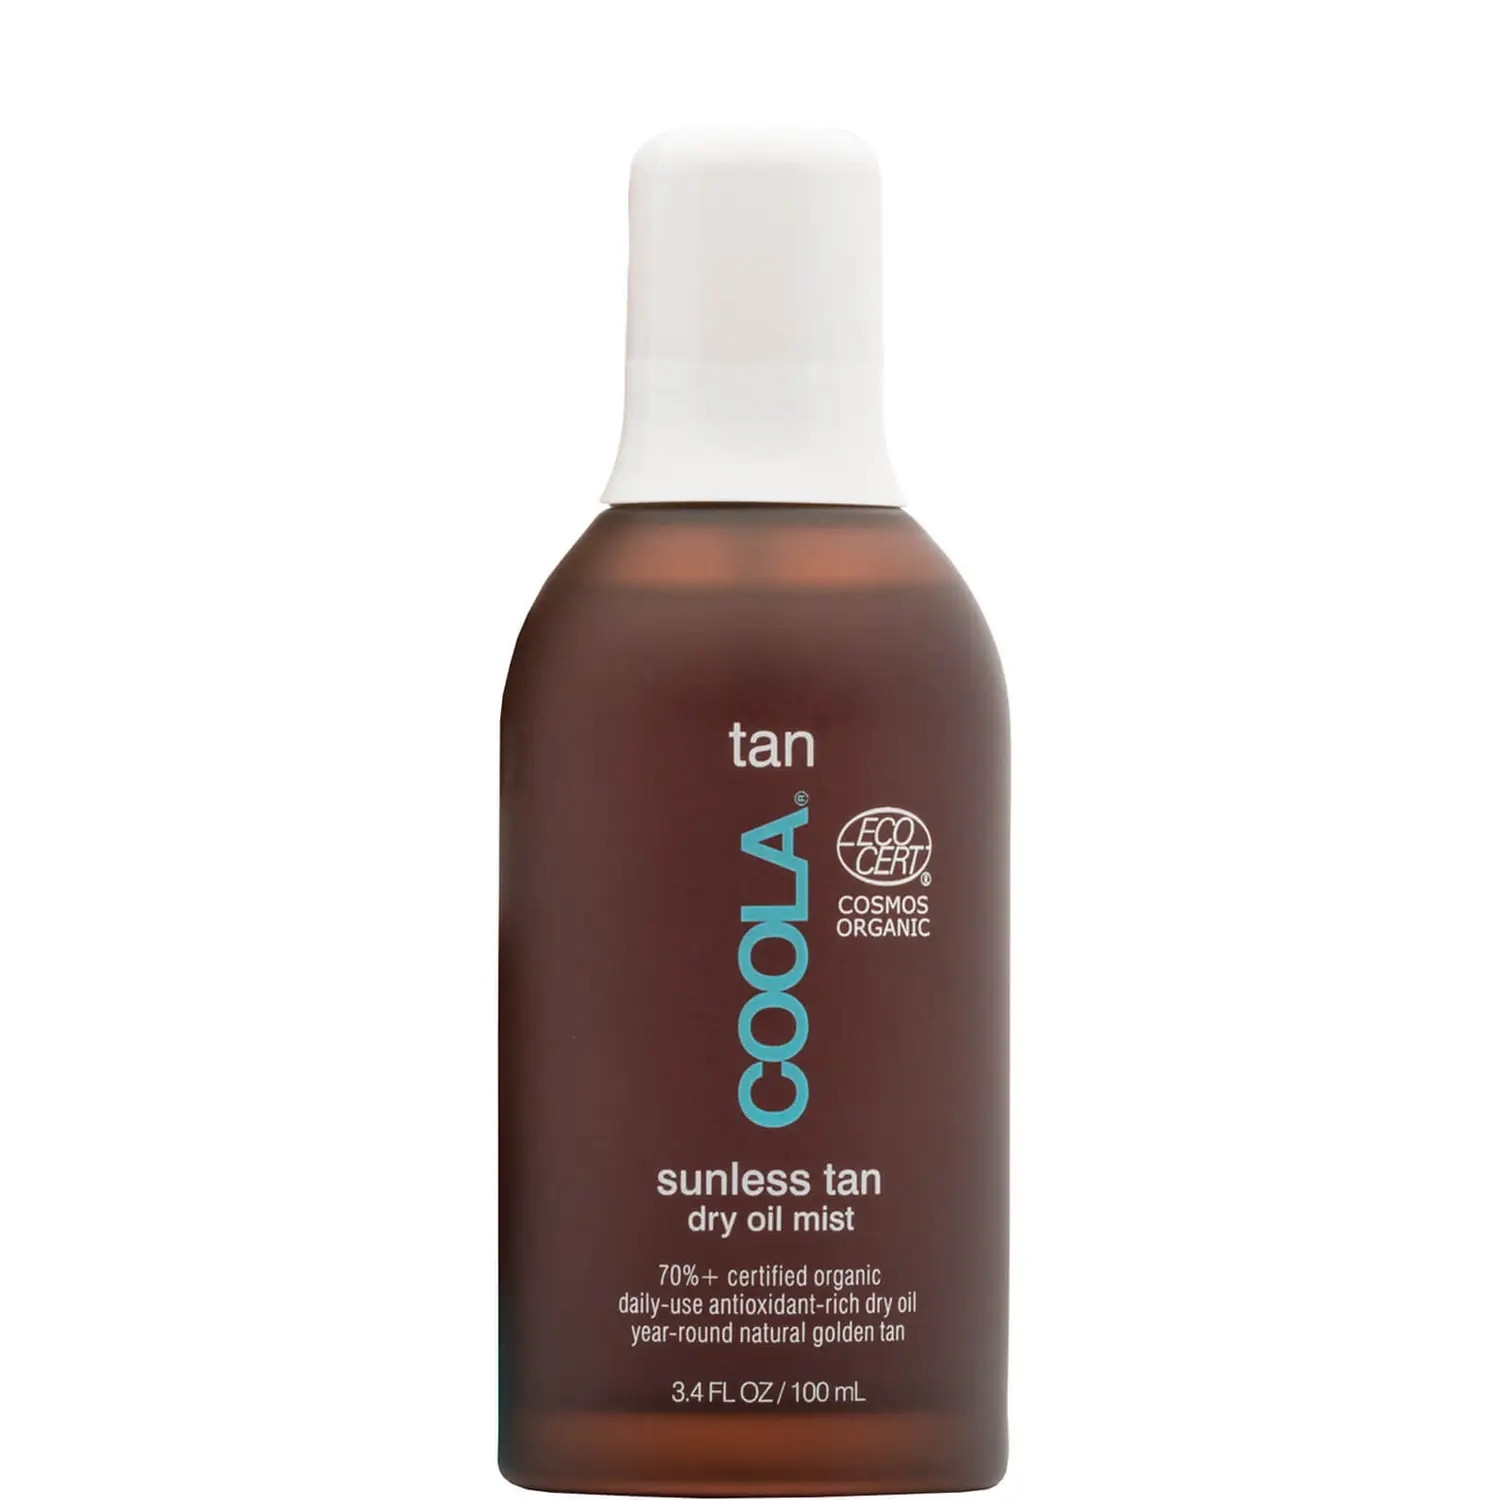 18.Coola Sunless Tan Dry Oil Mist €48.50,  